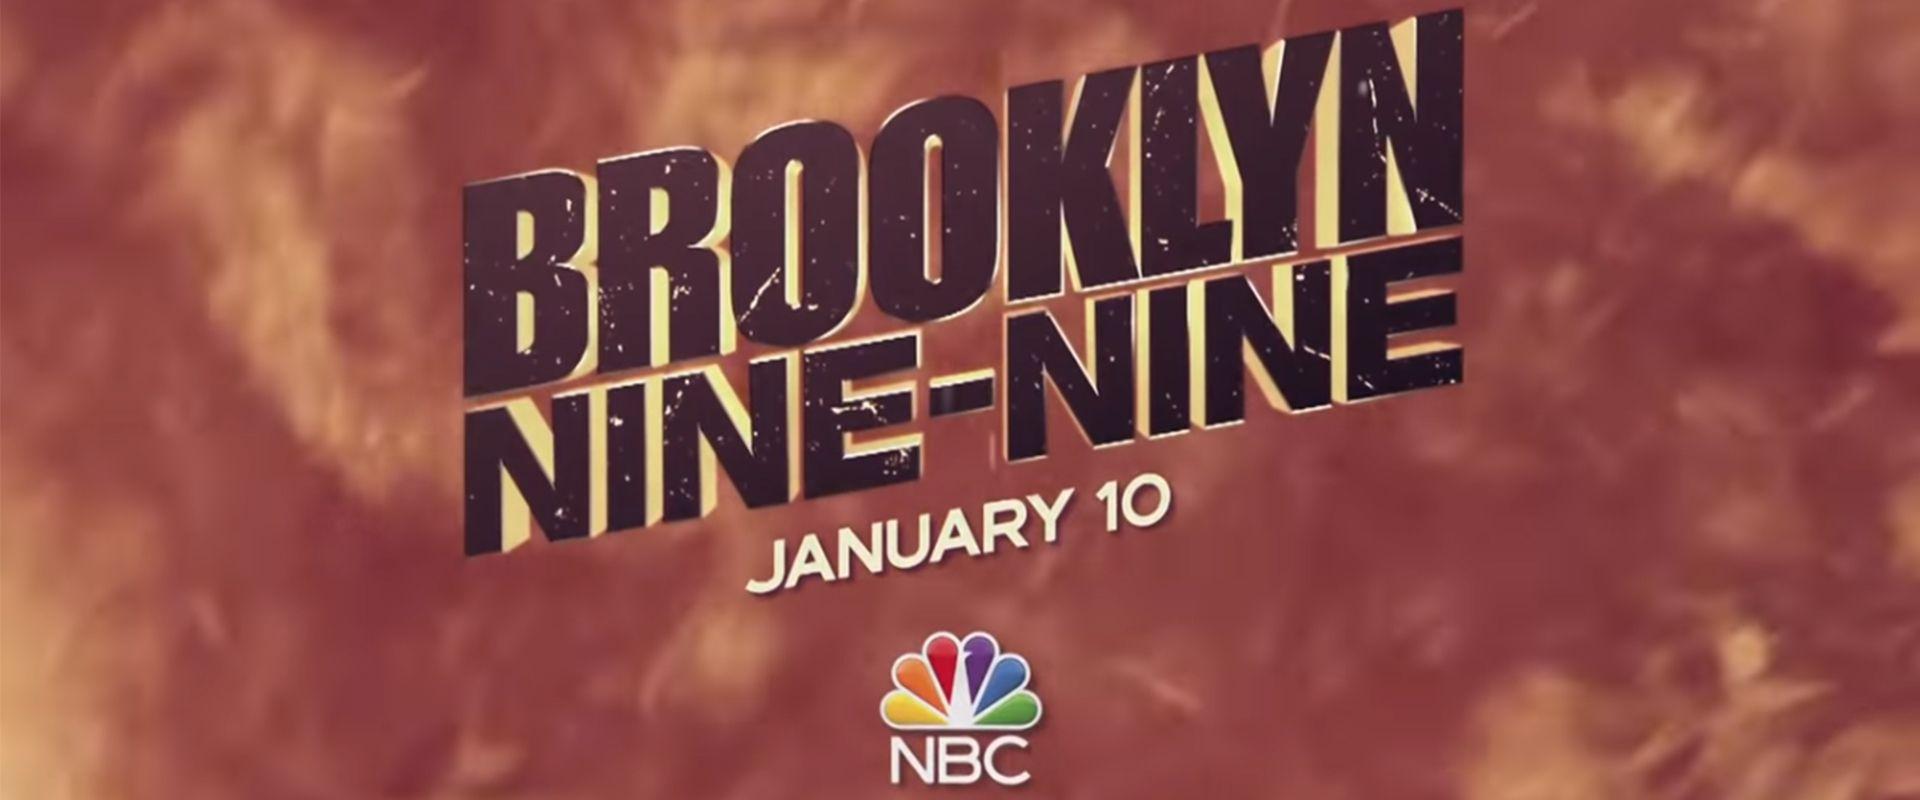 Nine Movie Logo - Digital Domain Brooklyn Nine-Nine All Action Trailer